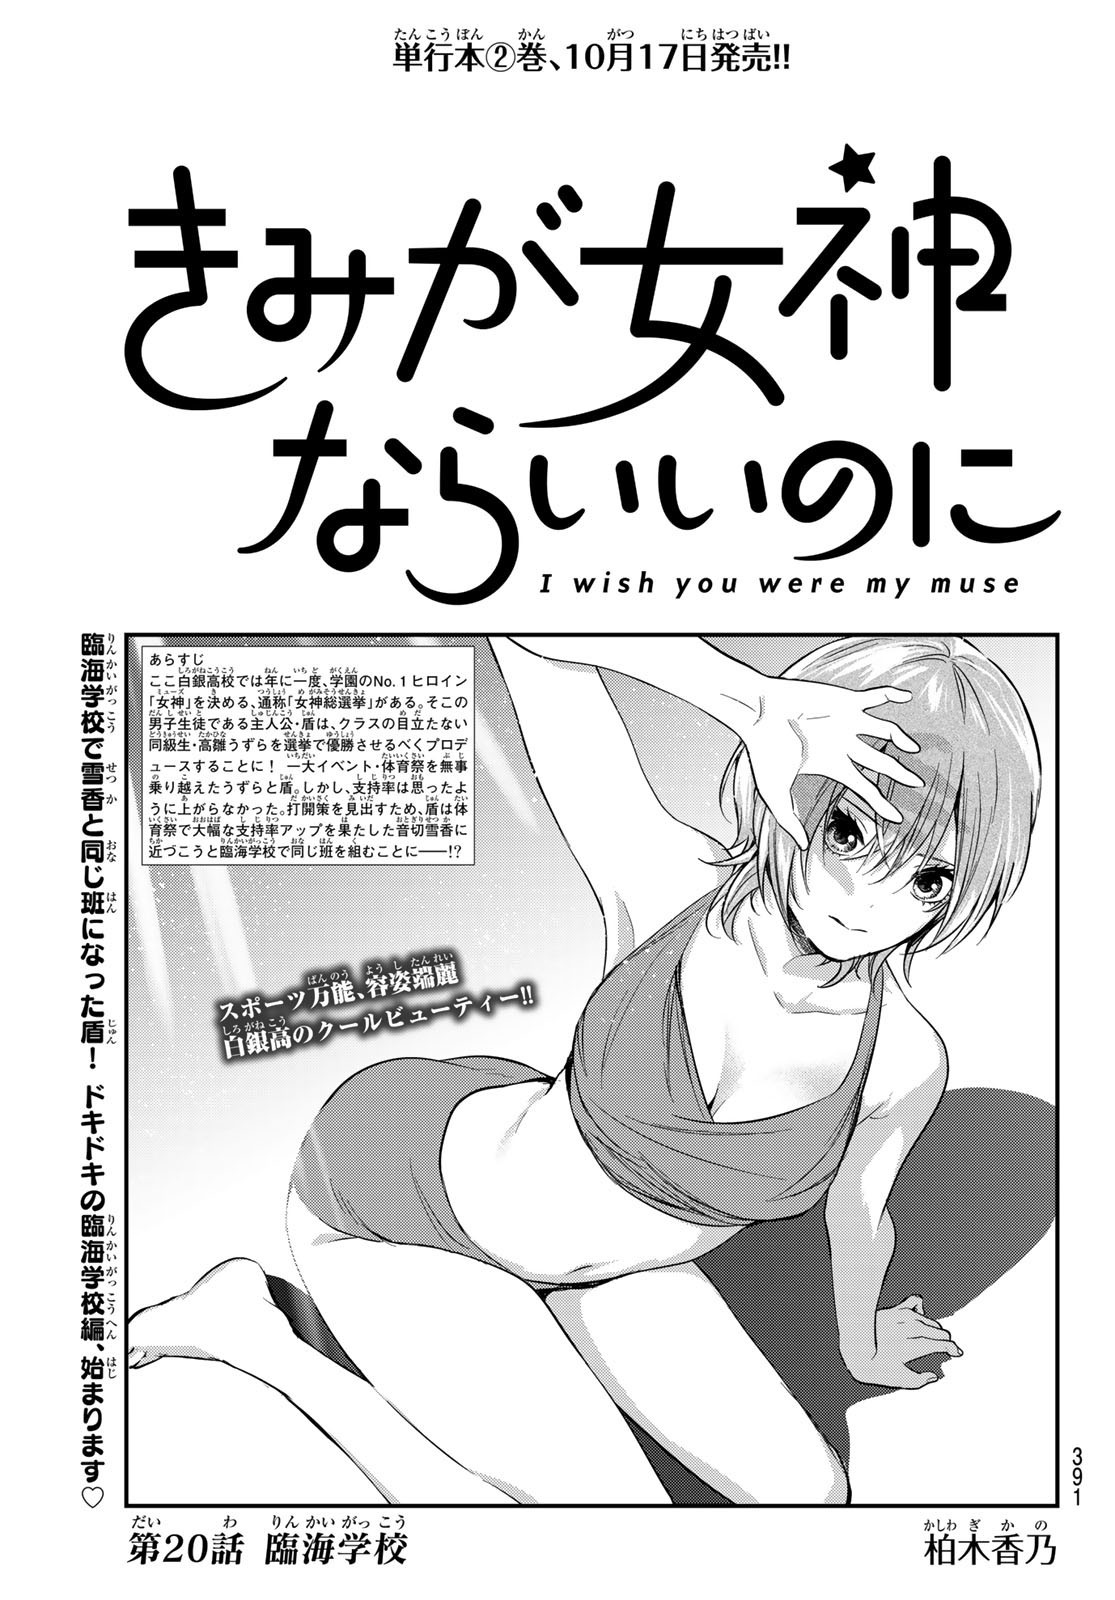 Kimi ga Megami Nara Ii no ni (I Wish You Were My Muse) - Chapter 020 - Page 1